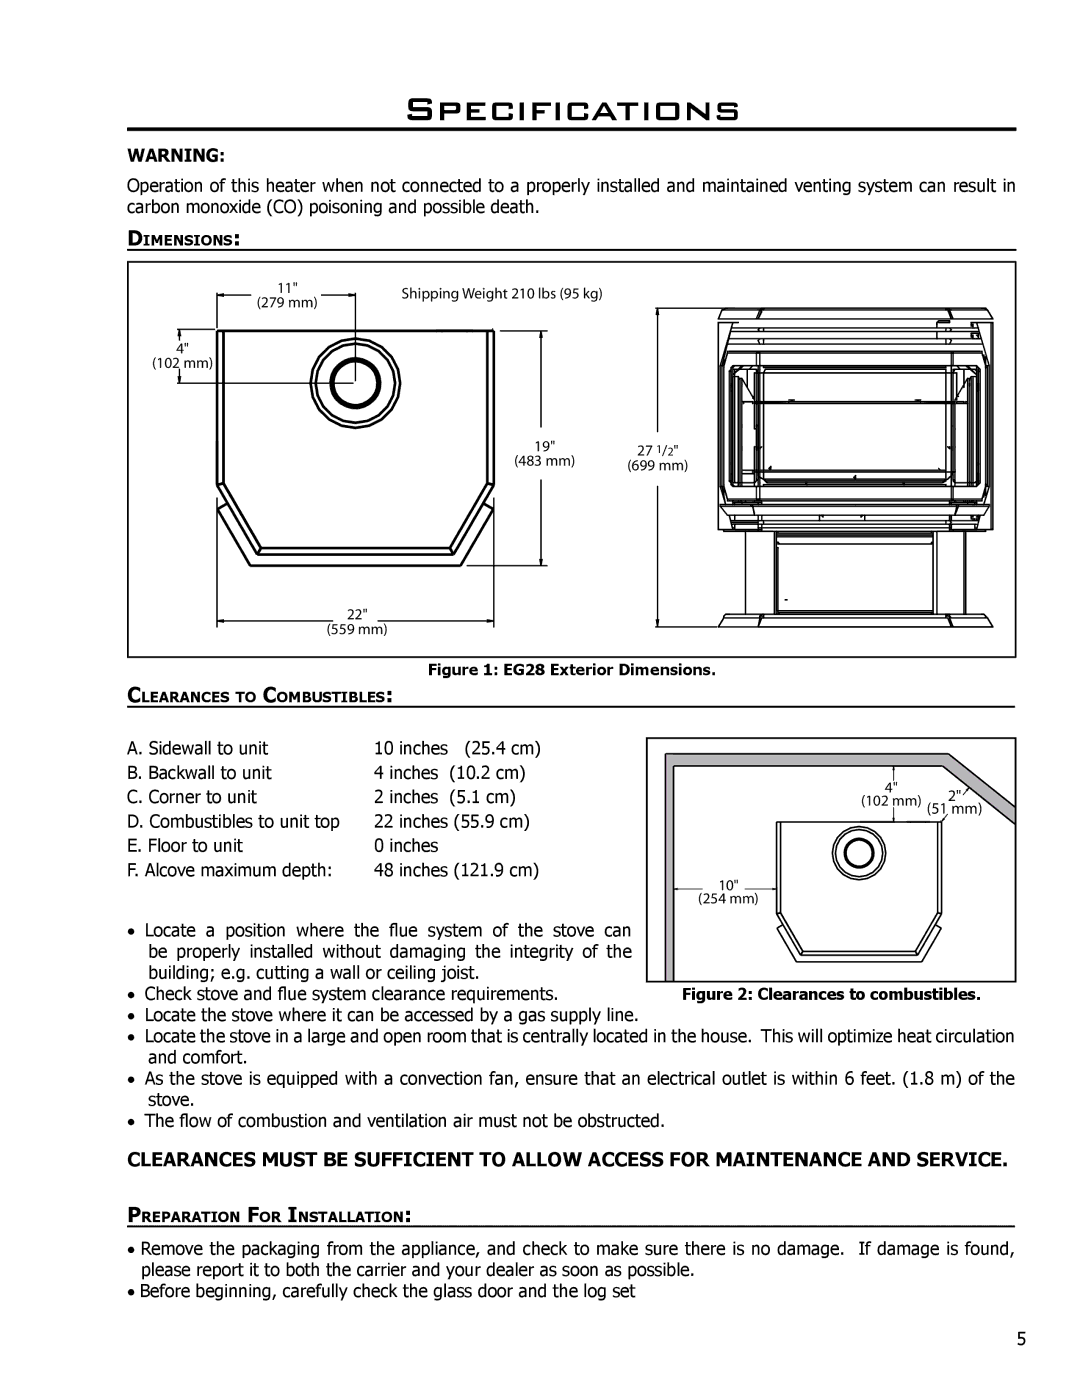 Enviro C-10450 owner manual Specifications, EG28 Exterior Dimensions 